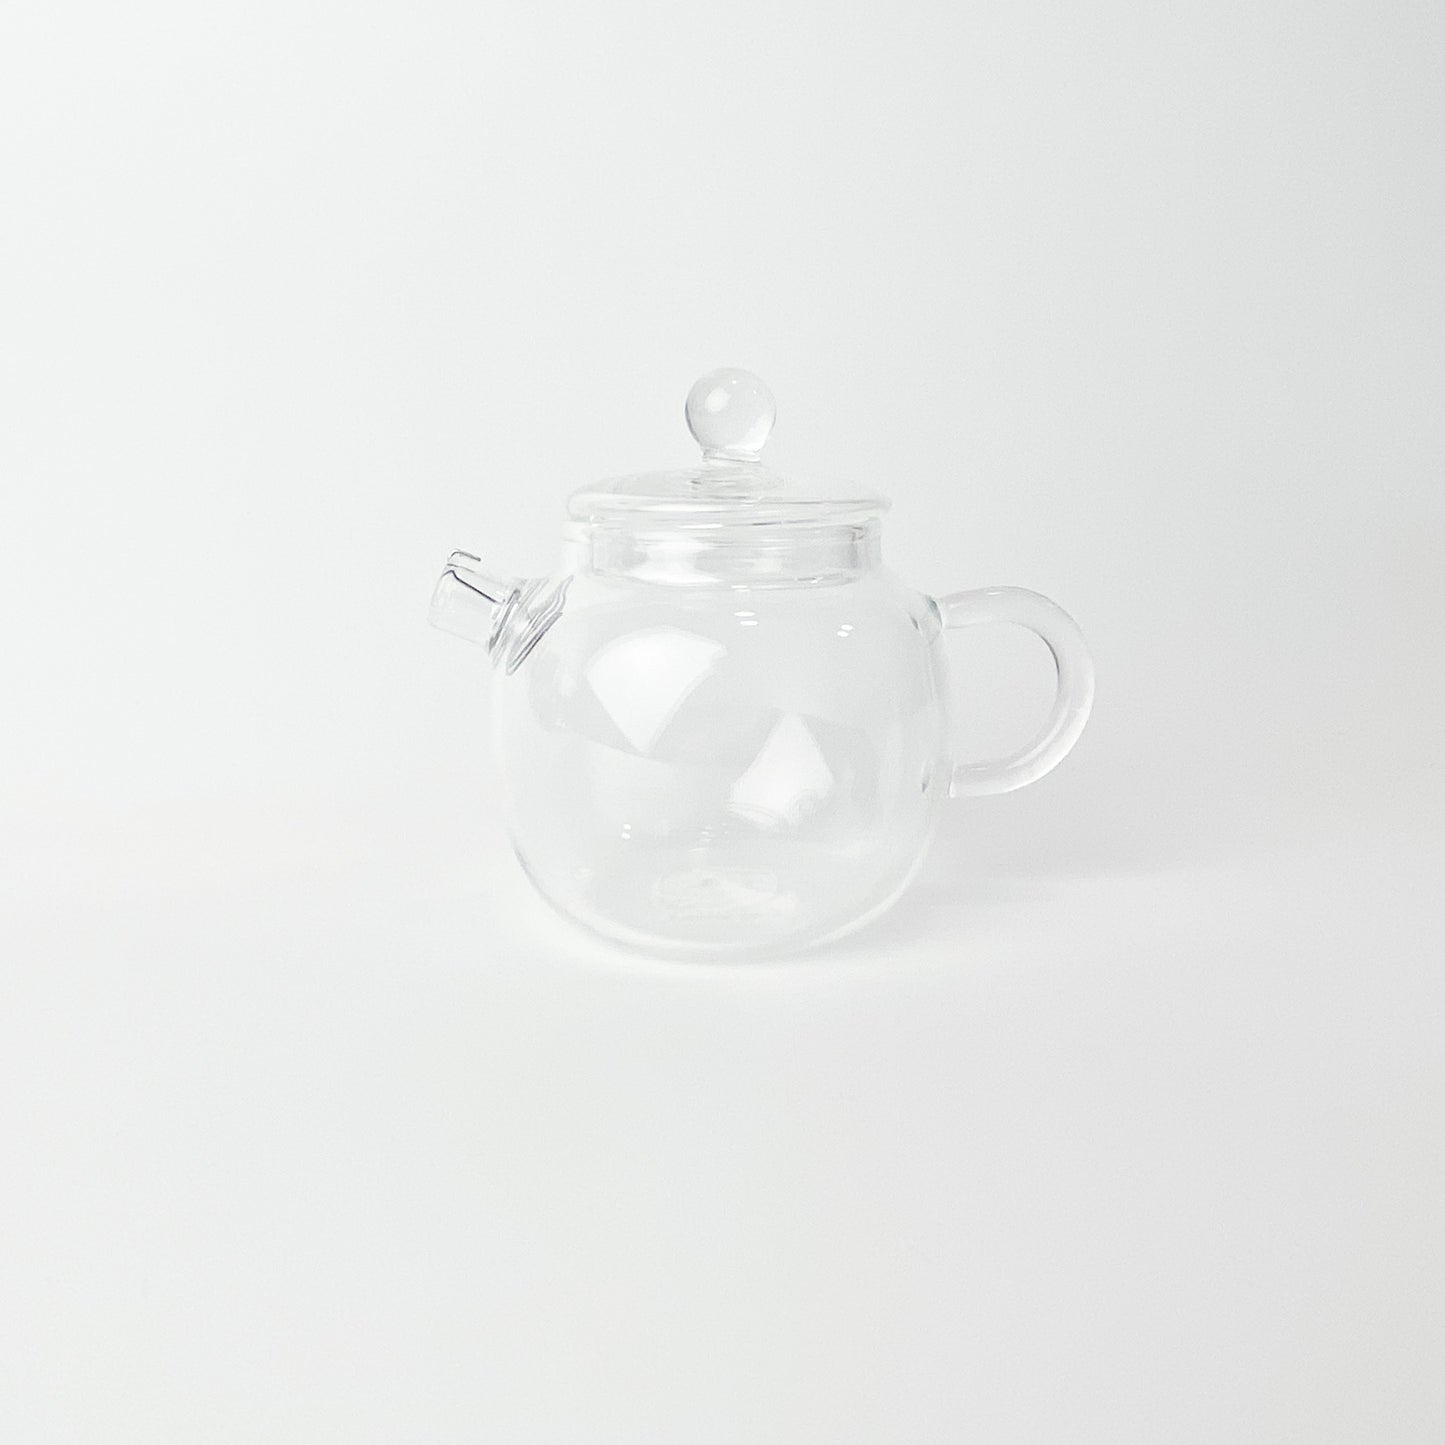 Small glass teapot